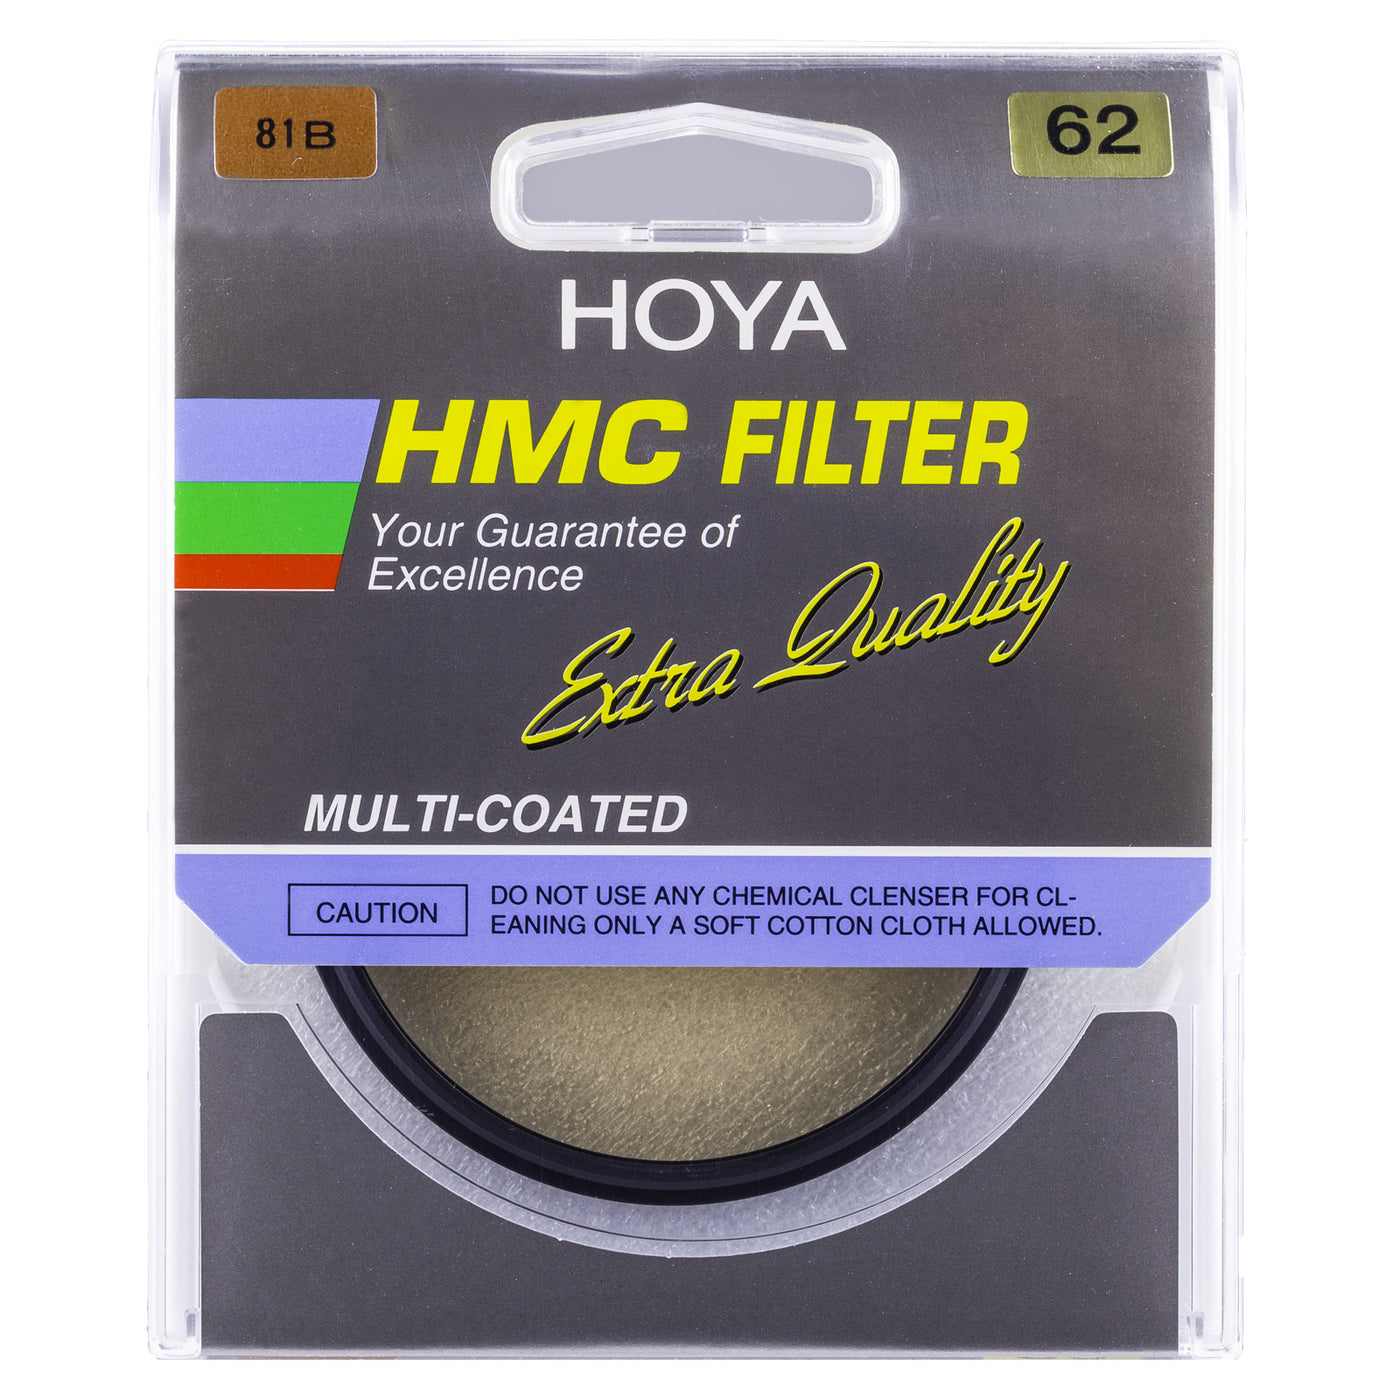 Hoya A 81 B Filter Box